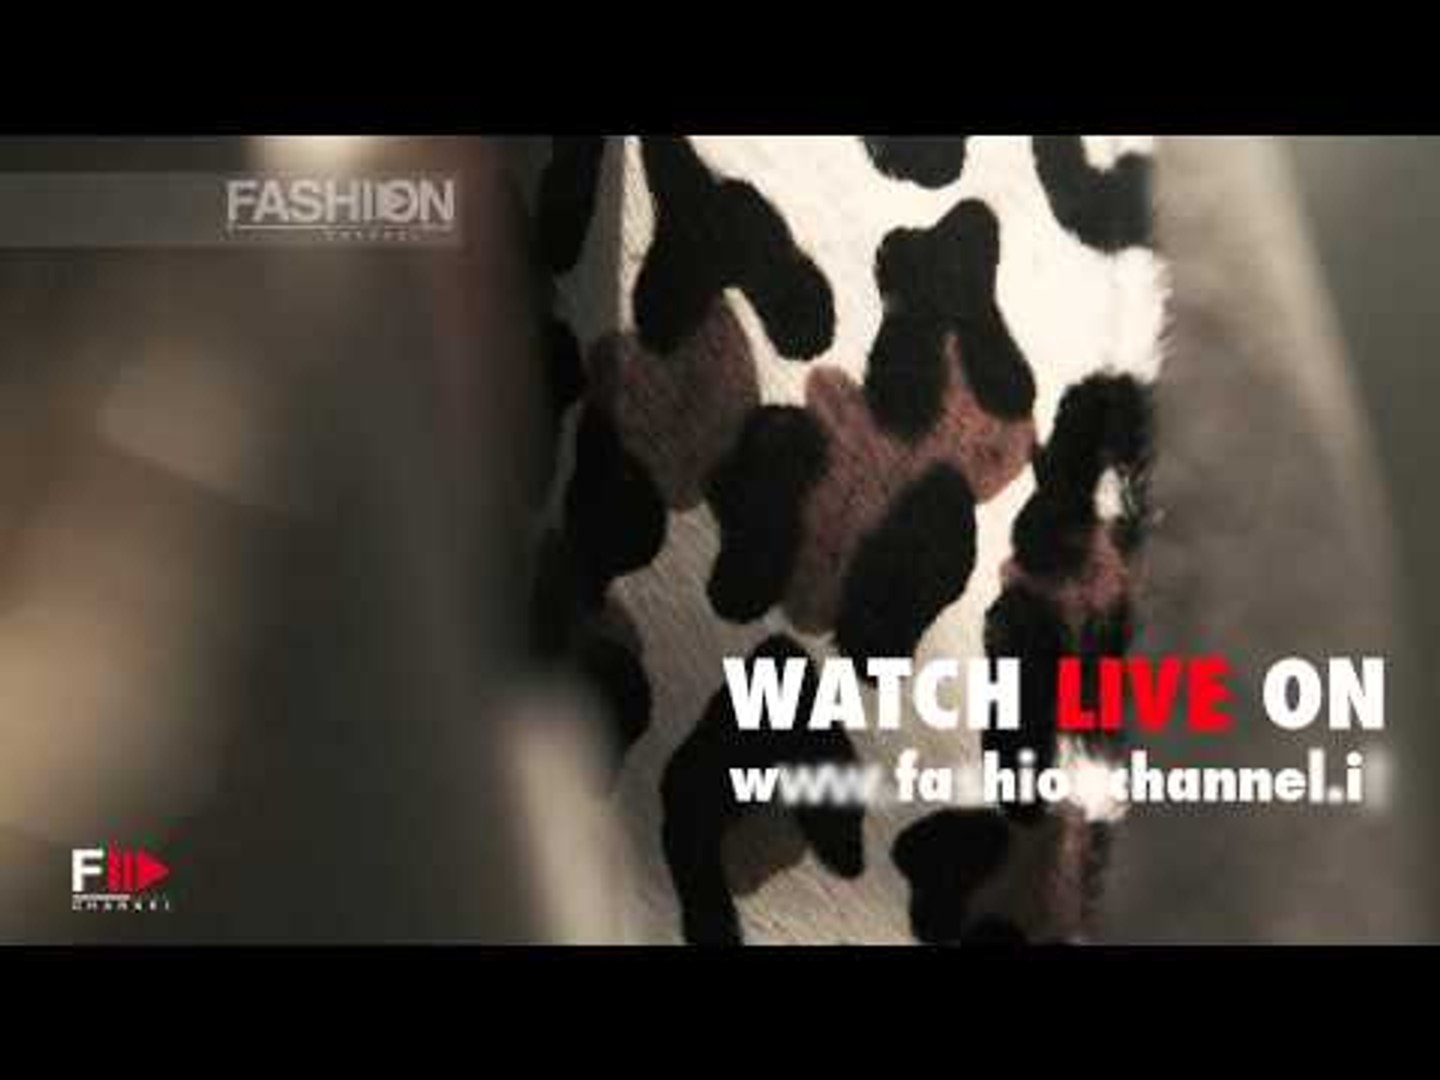 Burberry - Watch Live on www.fashionchannel.it